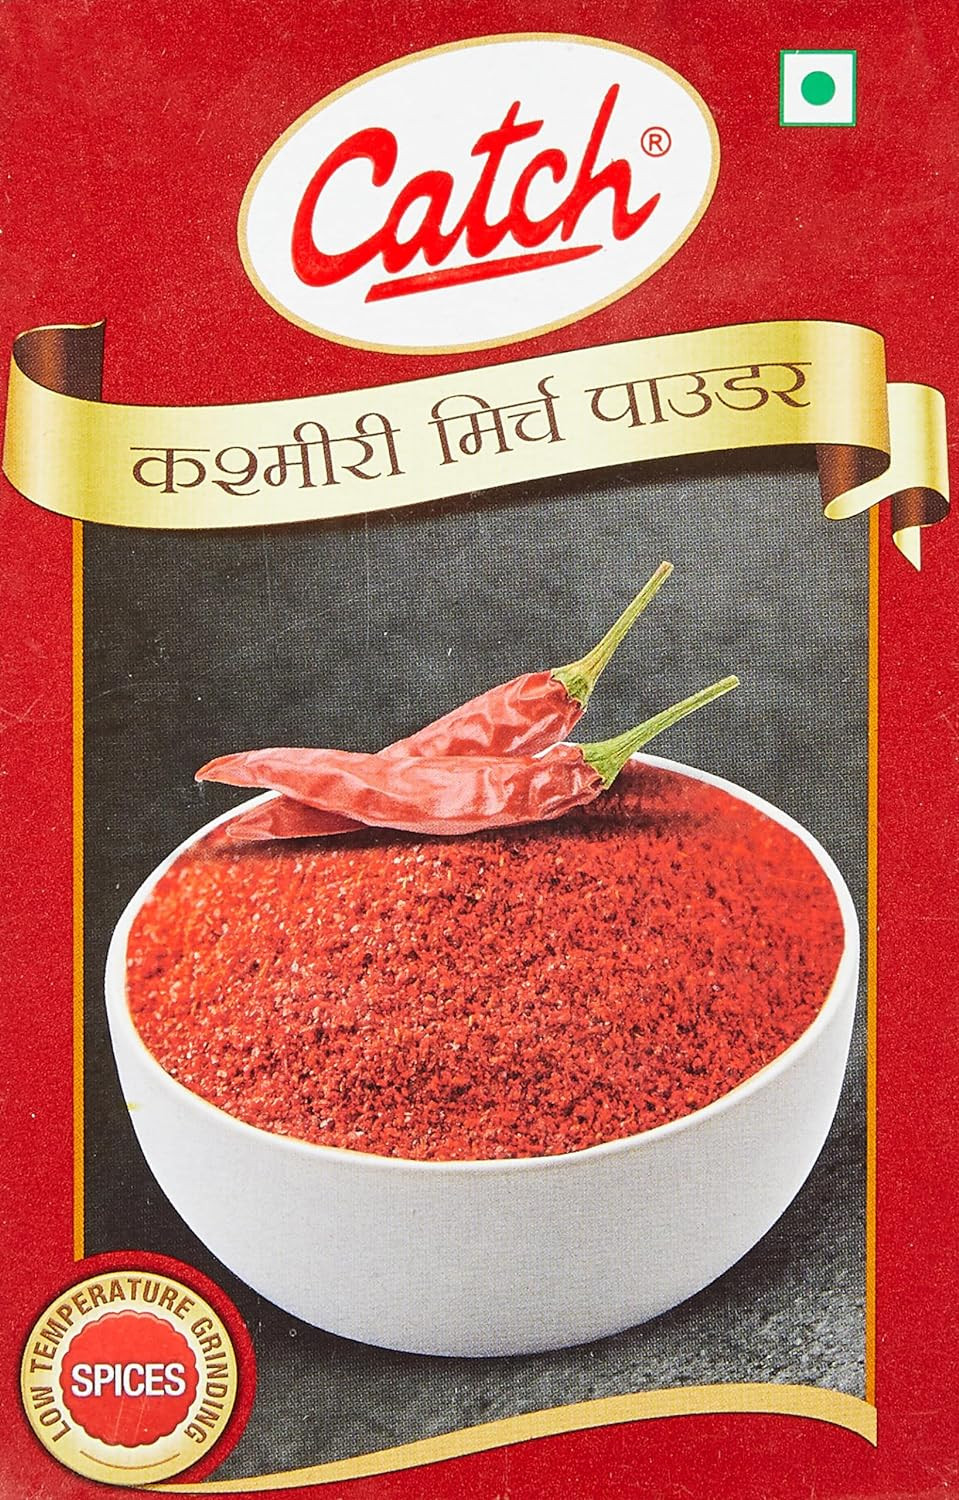 Catch Spice Kashmiri Chilli Powder, 100g